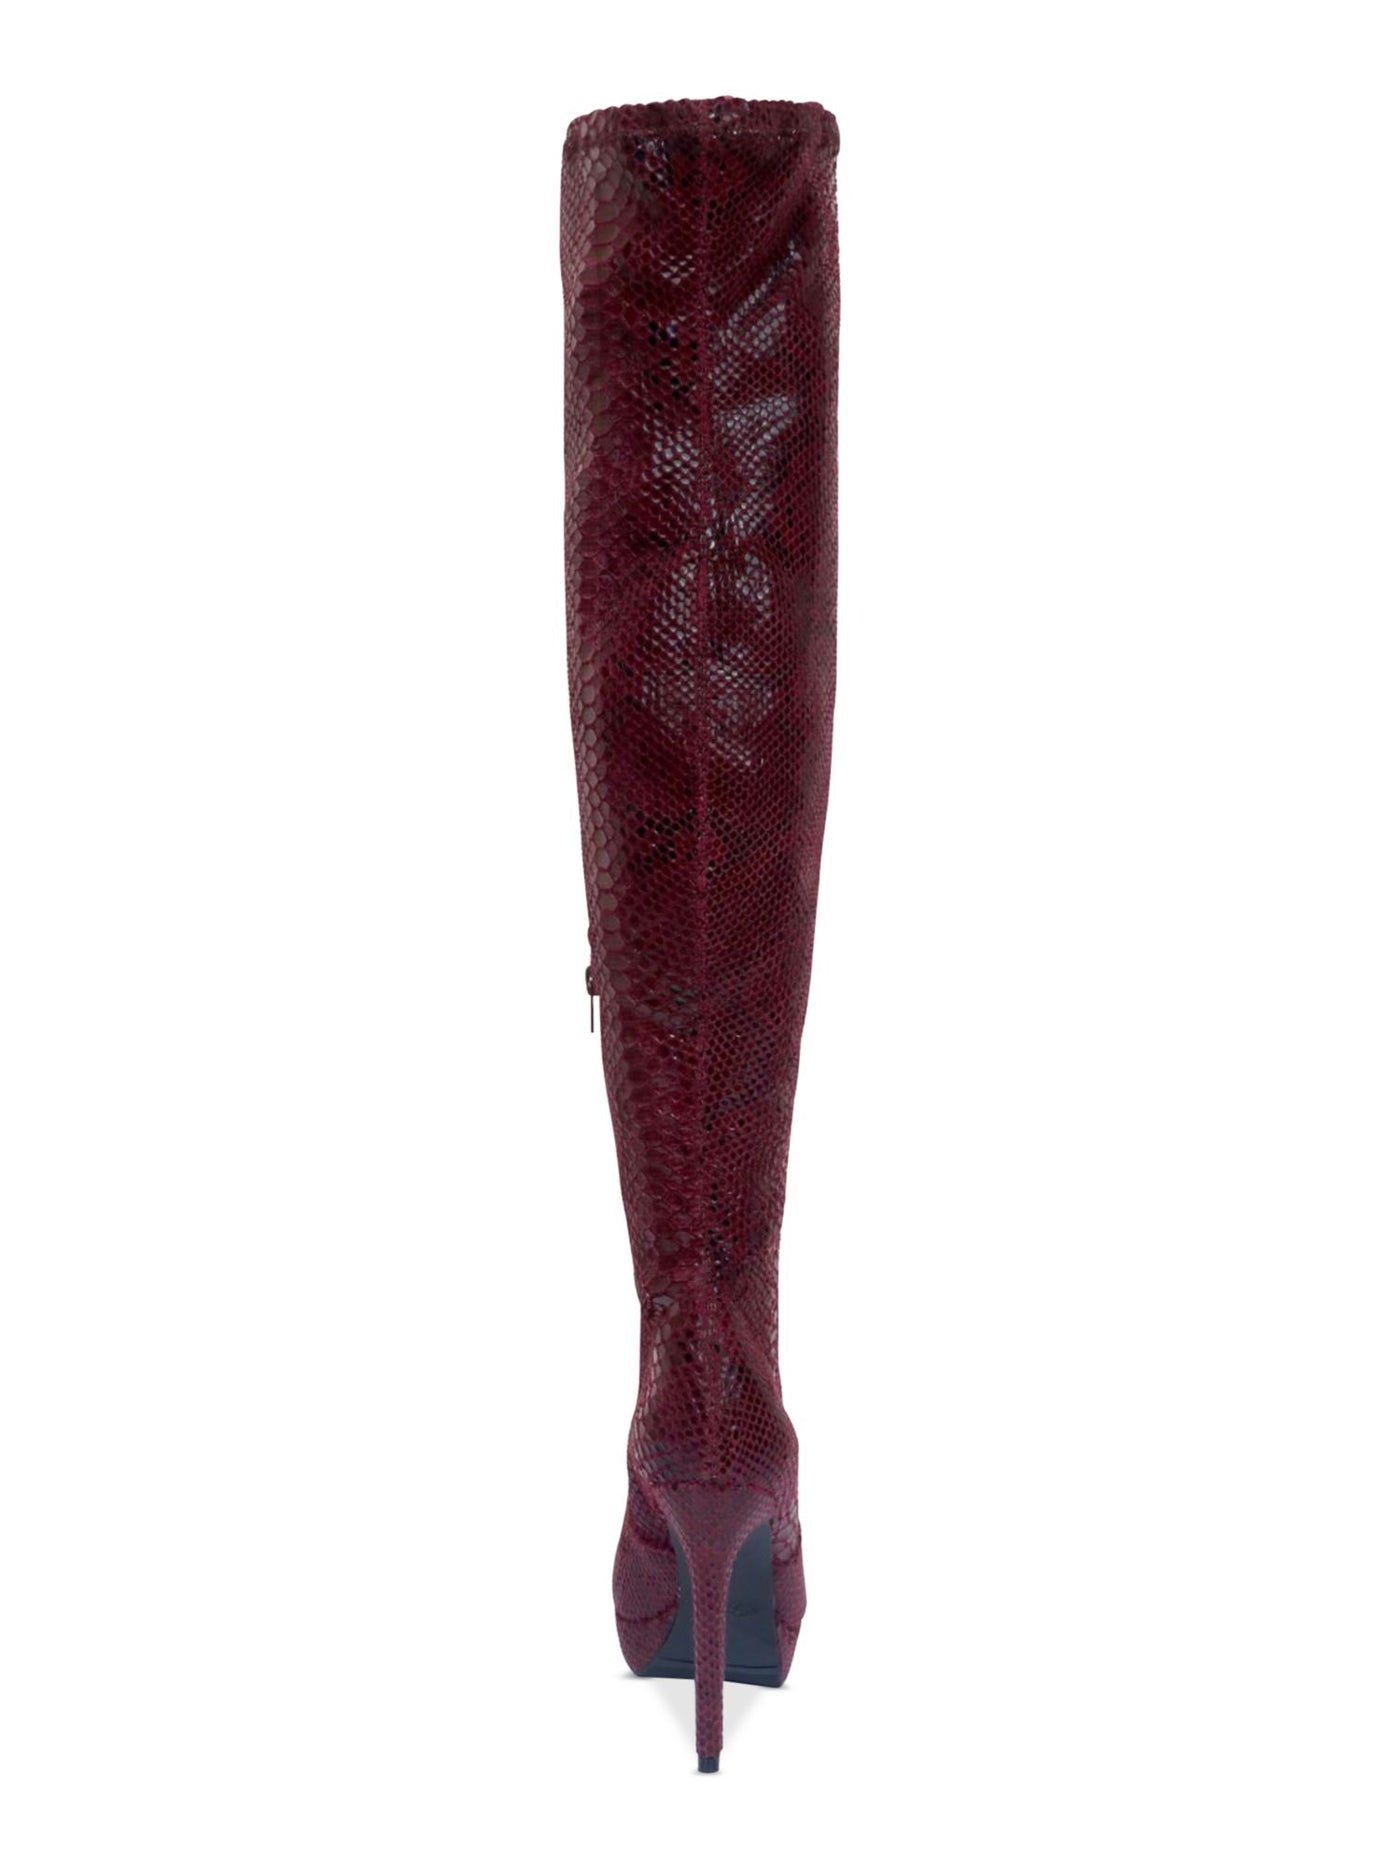 THALIA SODI Womens Burgundy Animal Print 1" Platform Round Toe Stiletto Zip-Up Dress Boots 8.5 M